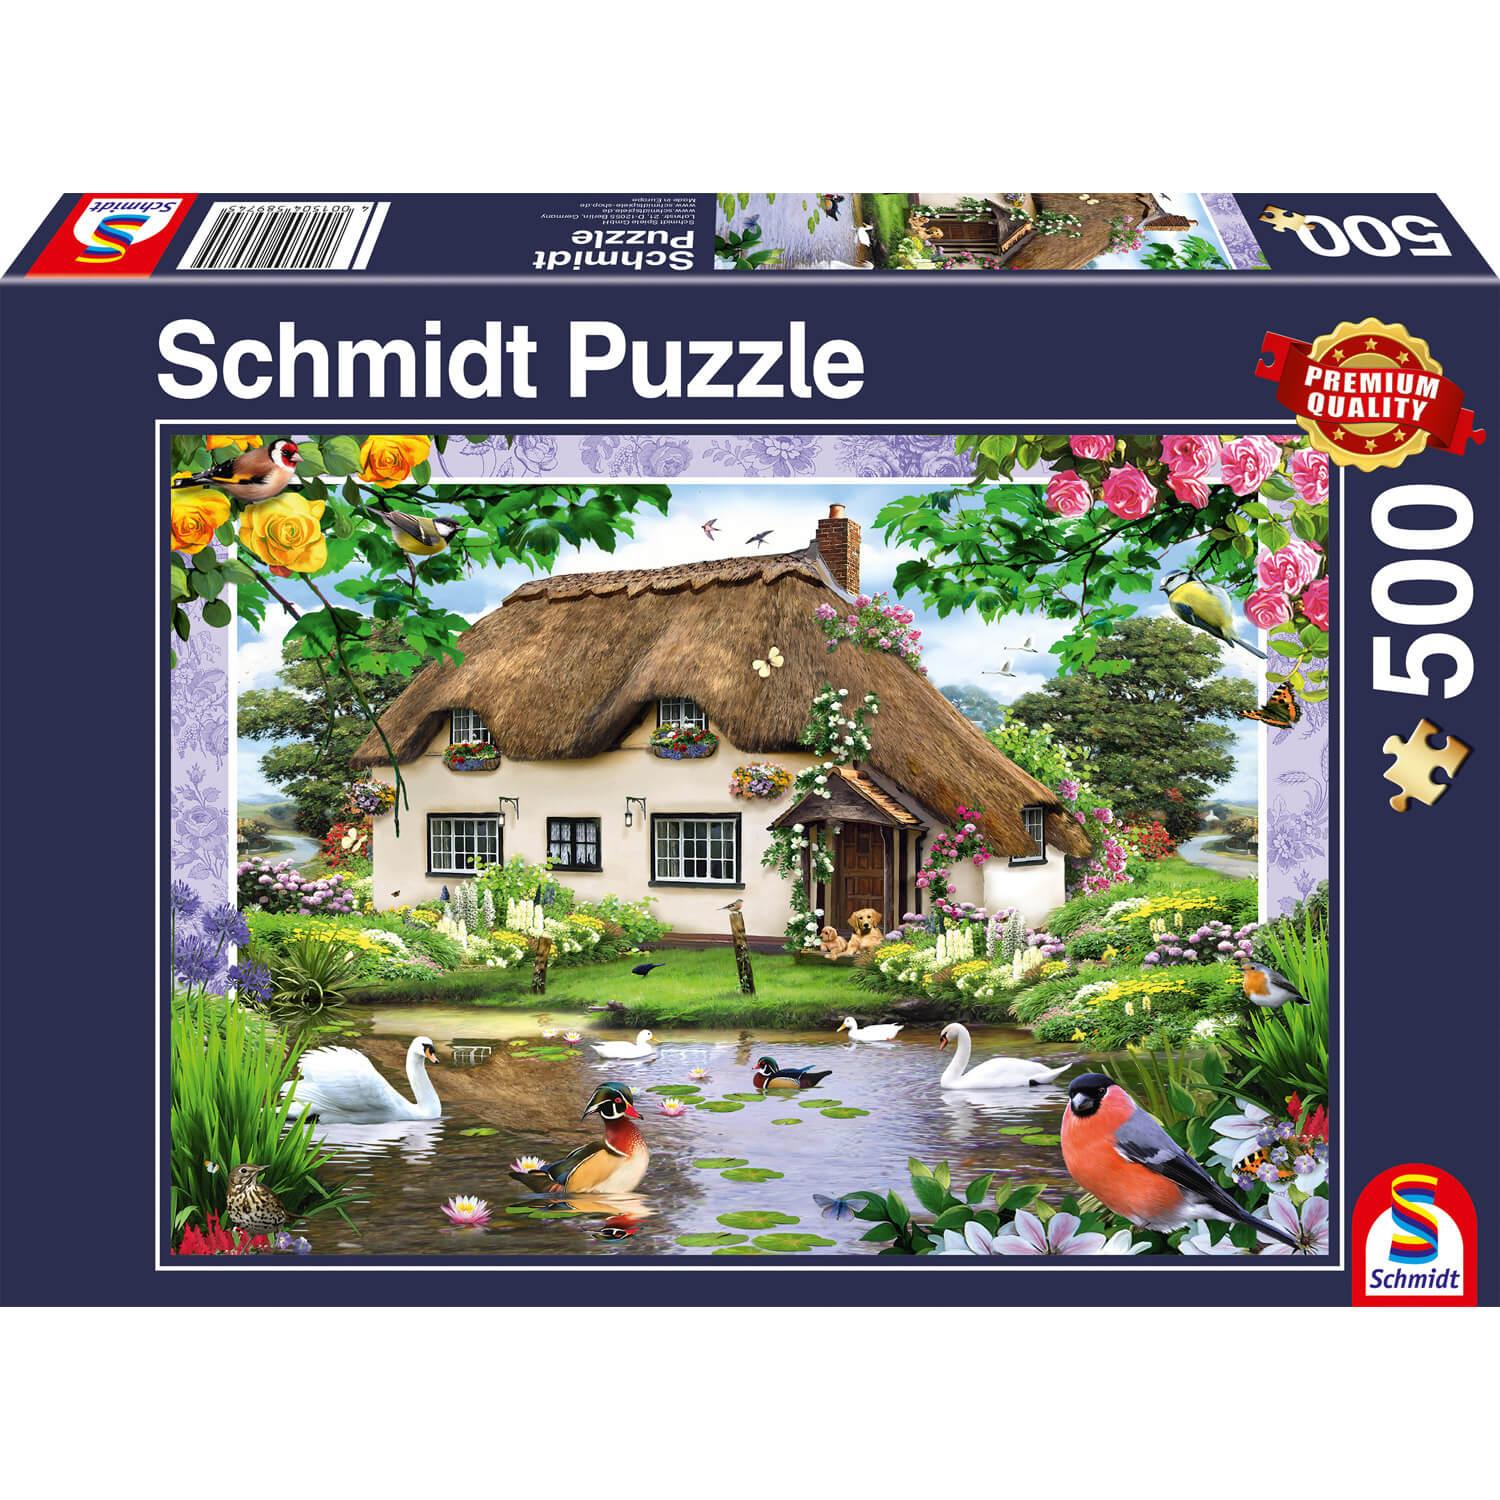 Schmidt Spiele Blumenbouquet 500 Teile Erwachsenenpuzzle Puzzle Steckpuzzle 